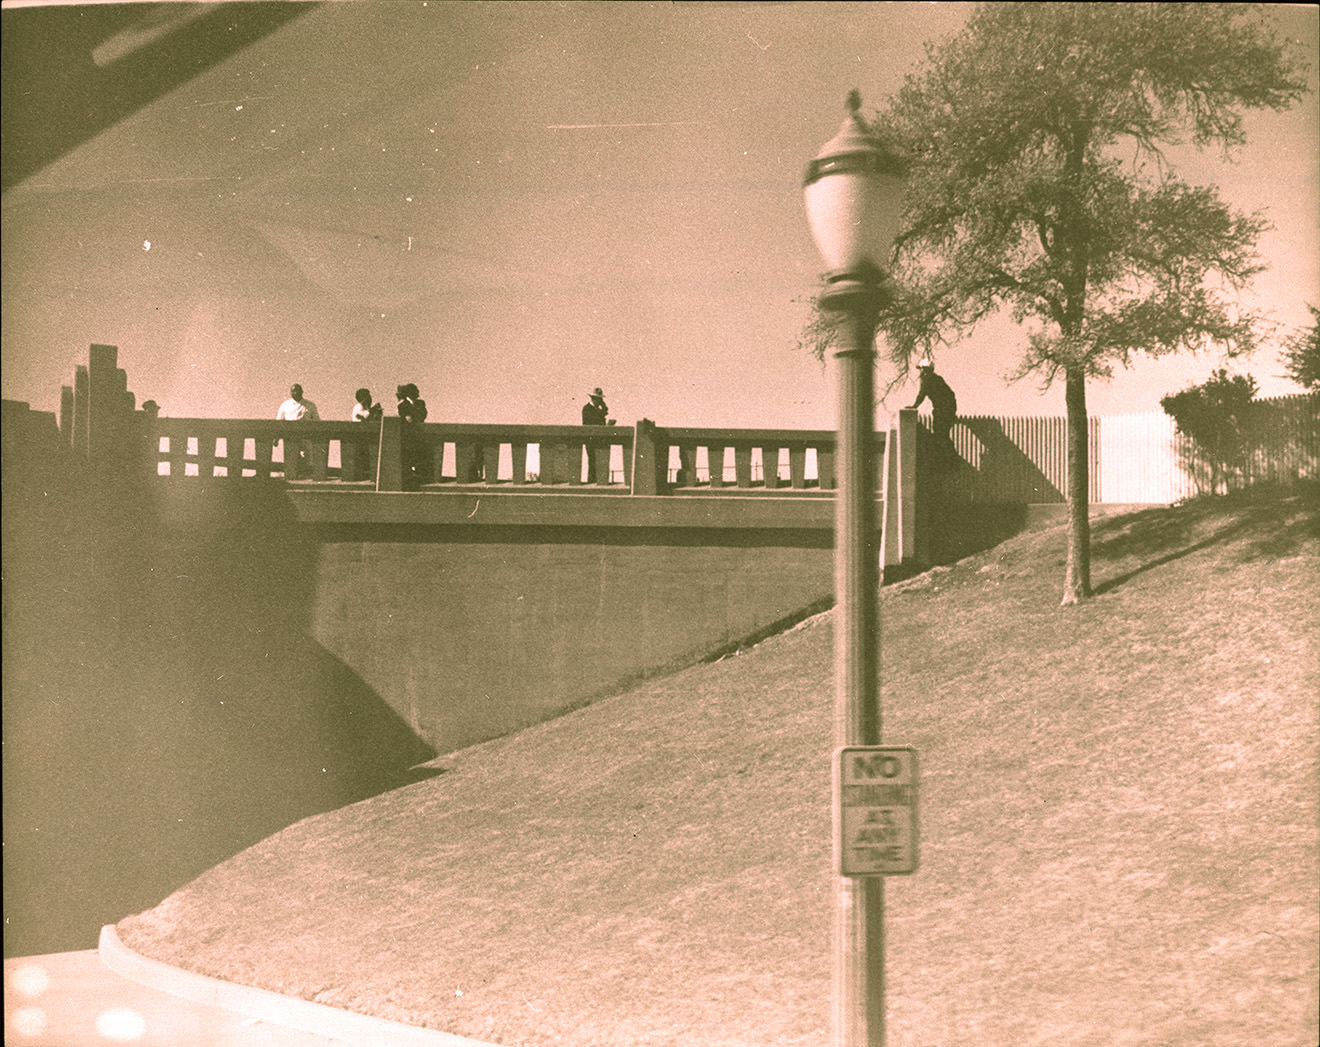 People standing on bridge overlooking grassy knoll, 1963